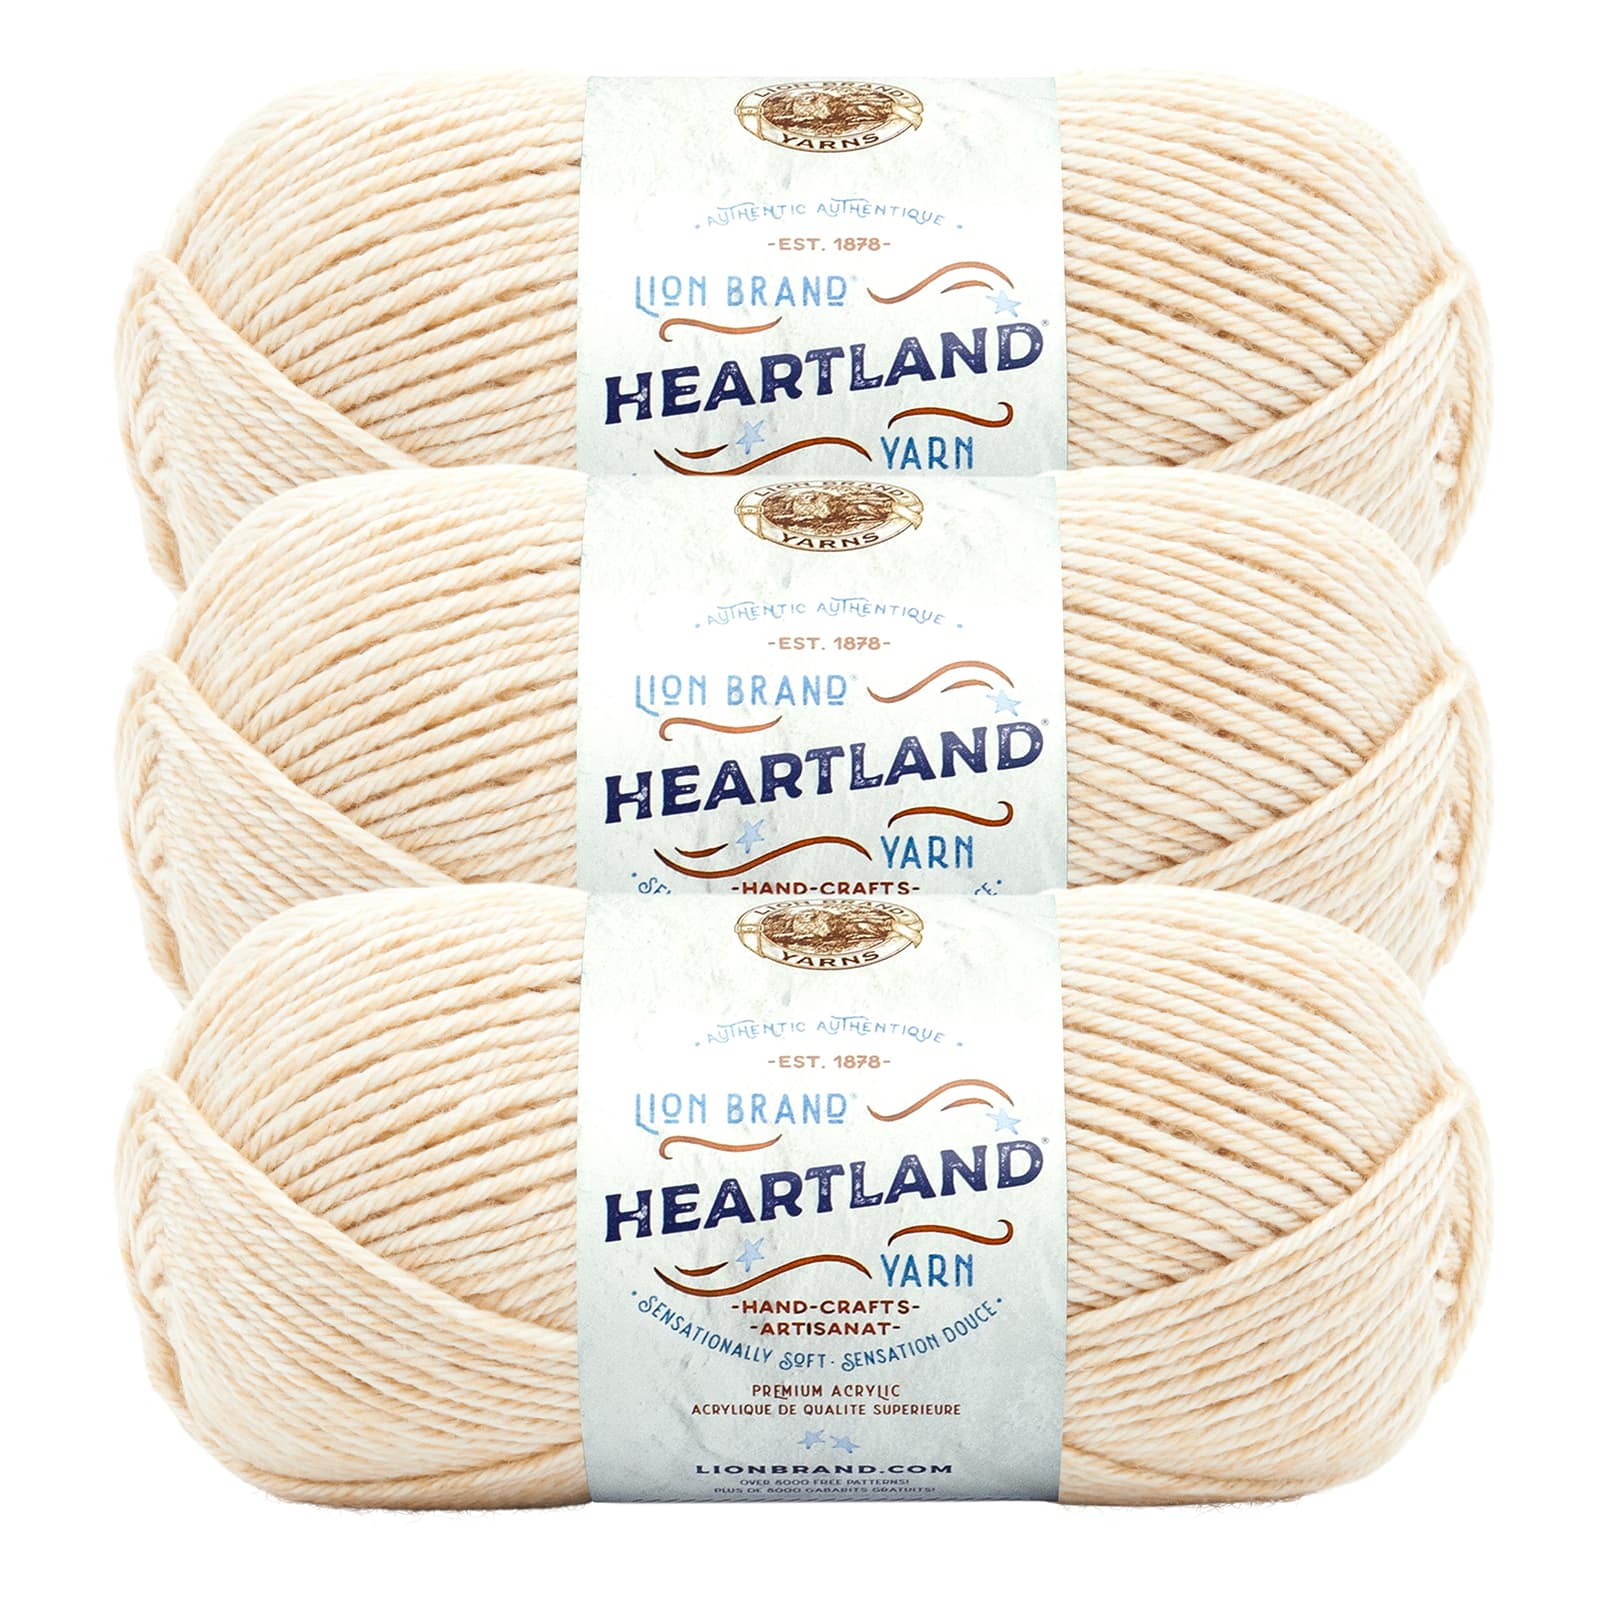 Lion Brand Heartland, Knitting Yarn & Wool